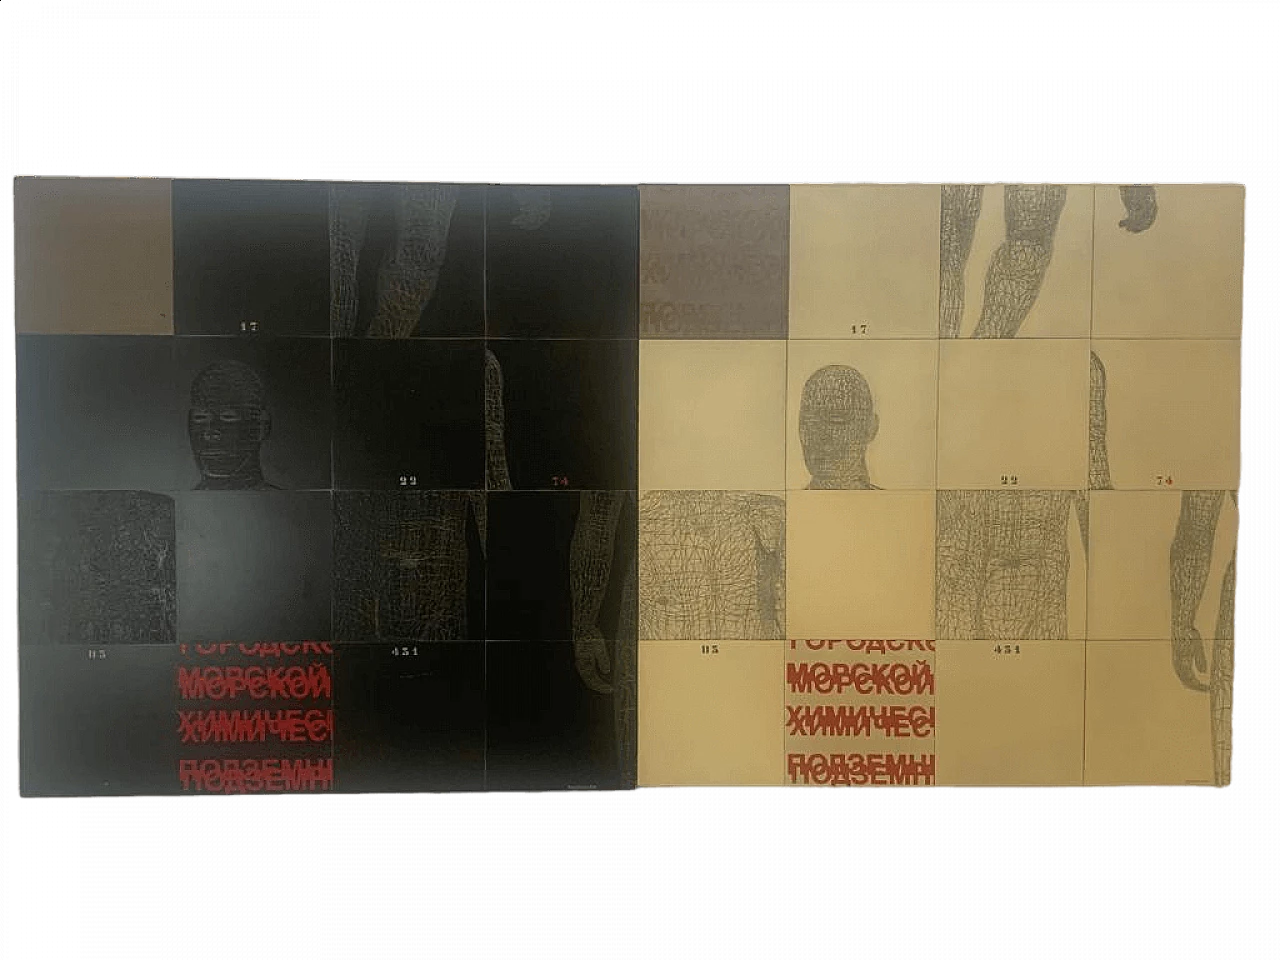 Stefano Bersani, Anatomical Scan Composition, tecnica mista, 2014 8